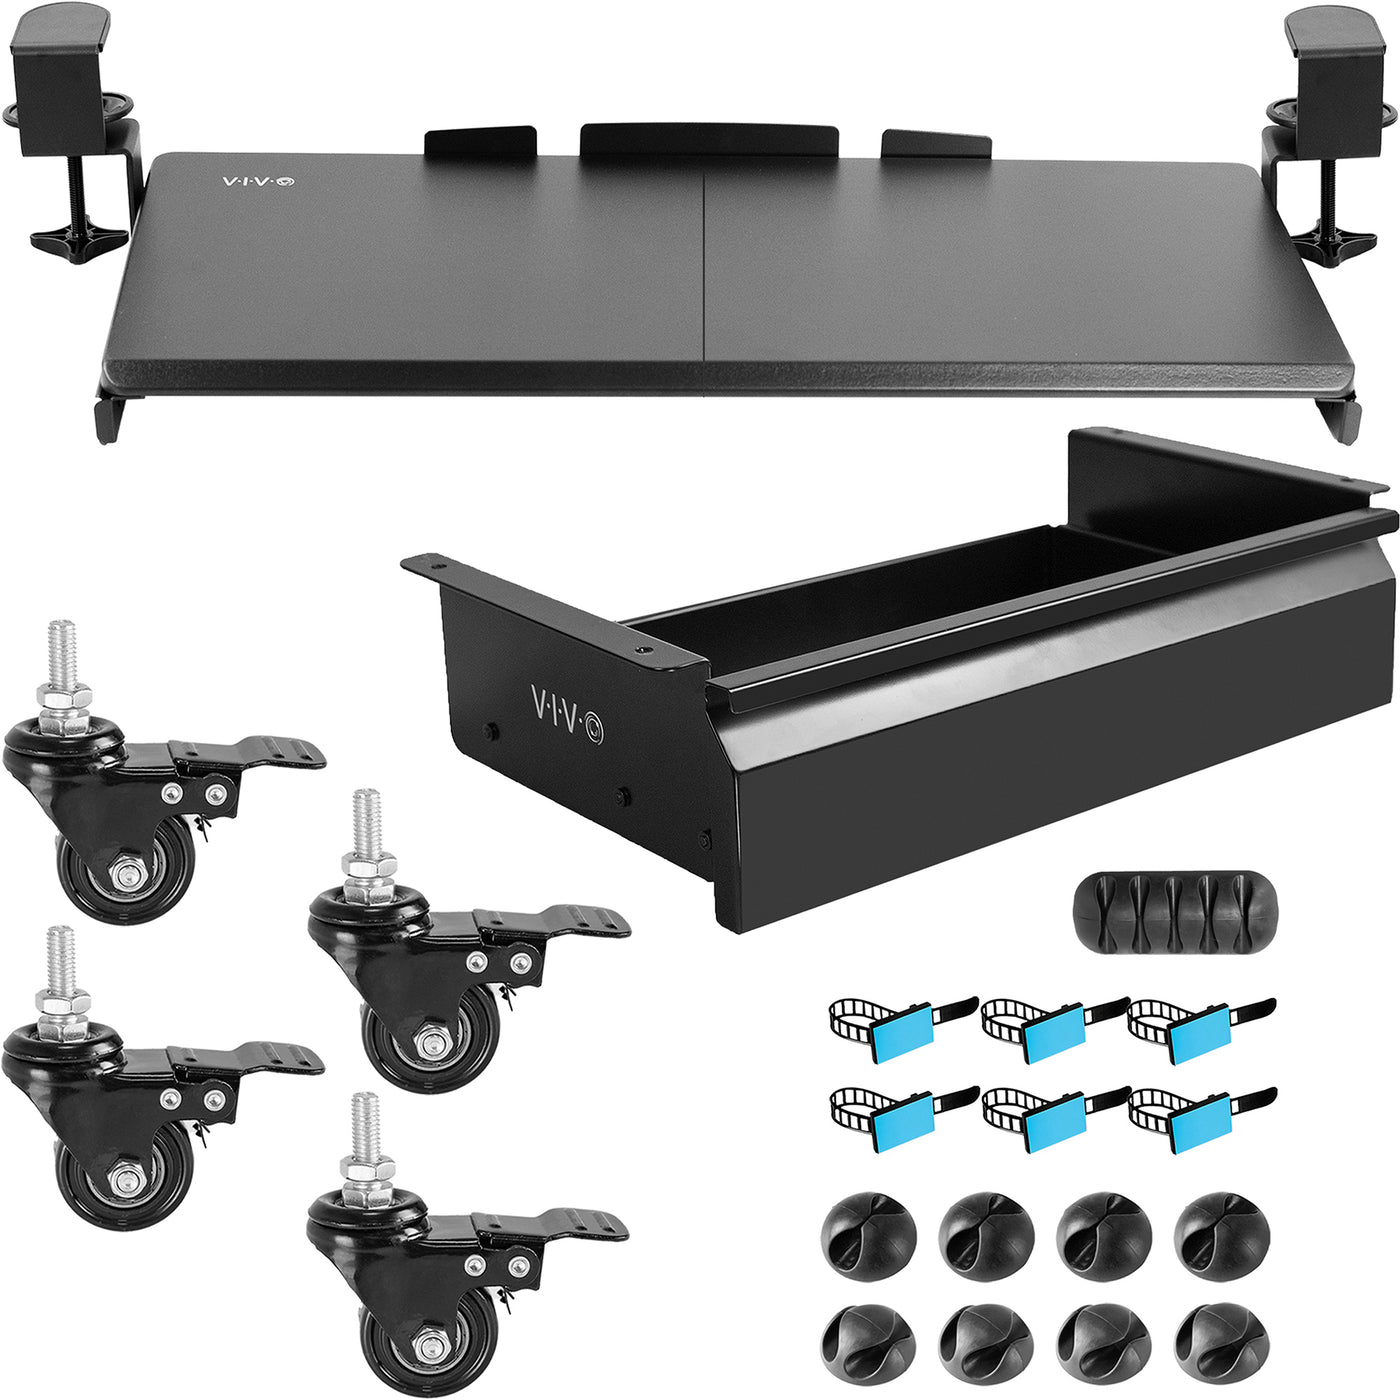 Desk accessory kit from VIVO.